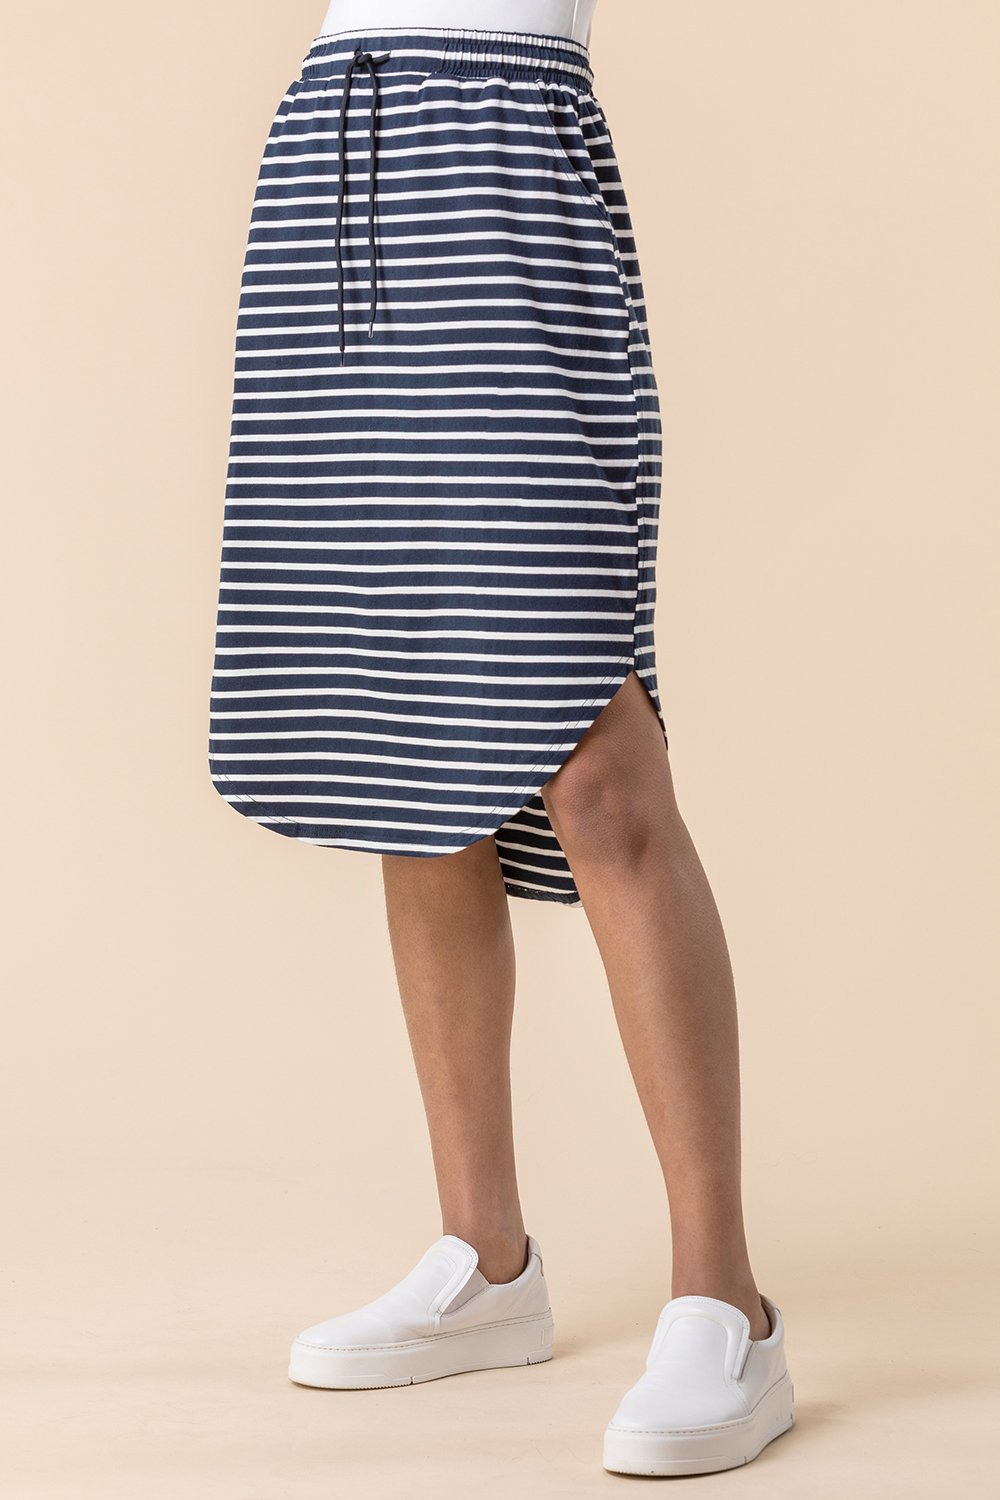 Jersey Stripe Print Skirt in Navy 